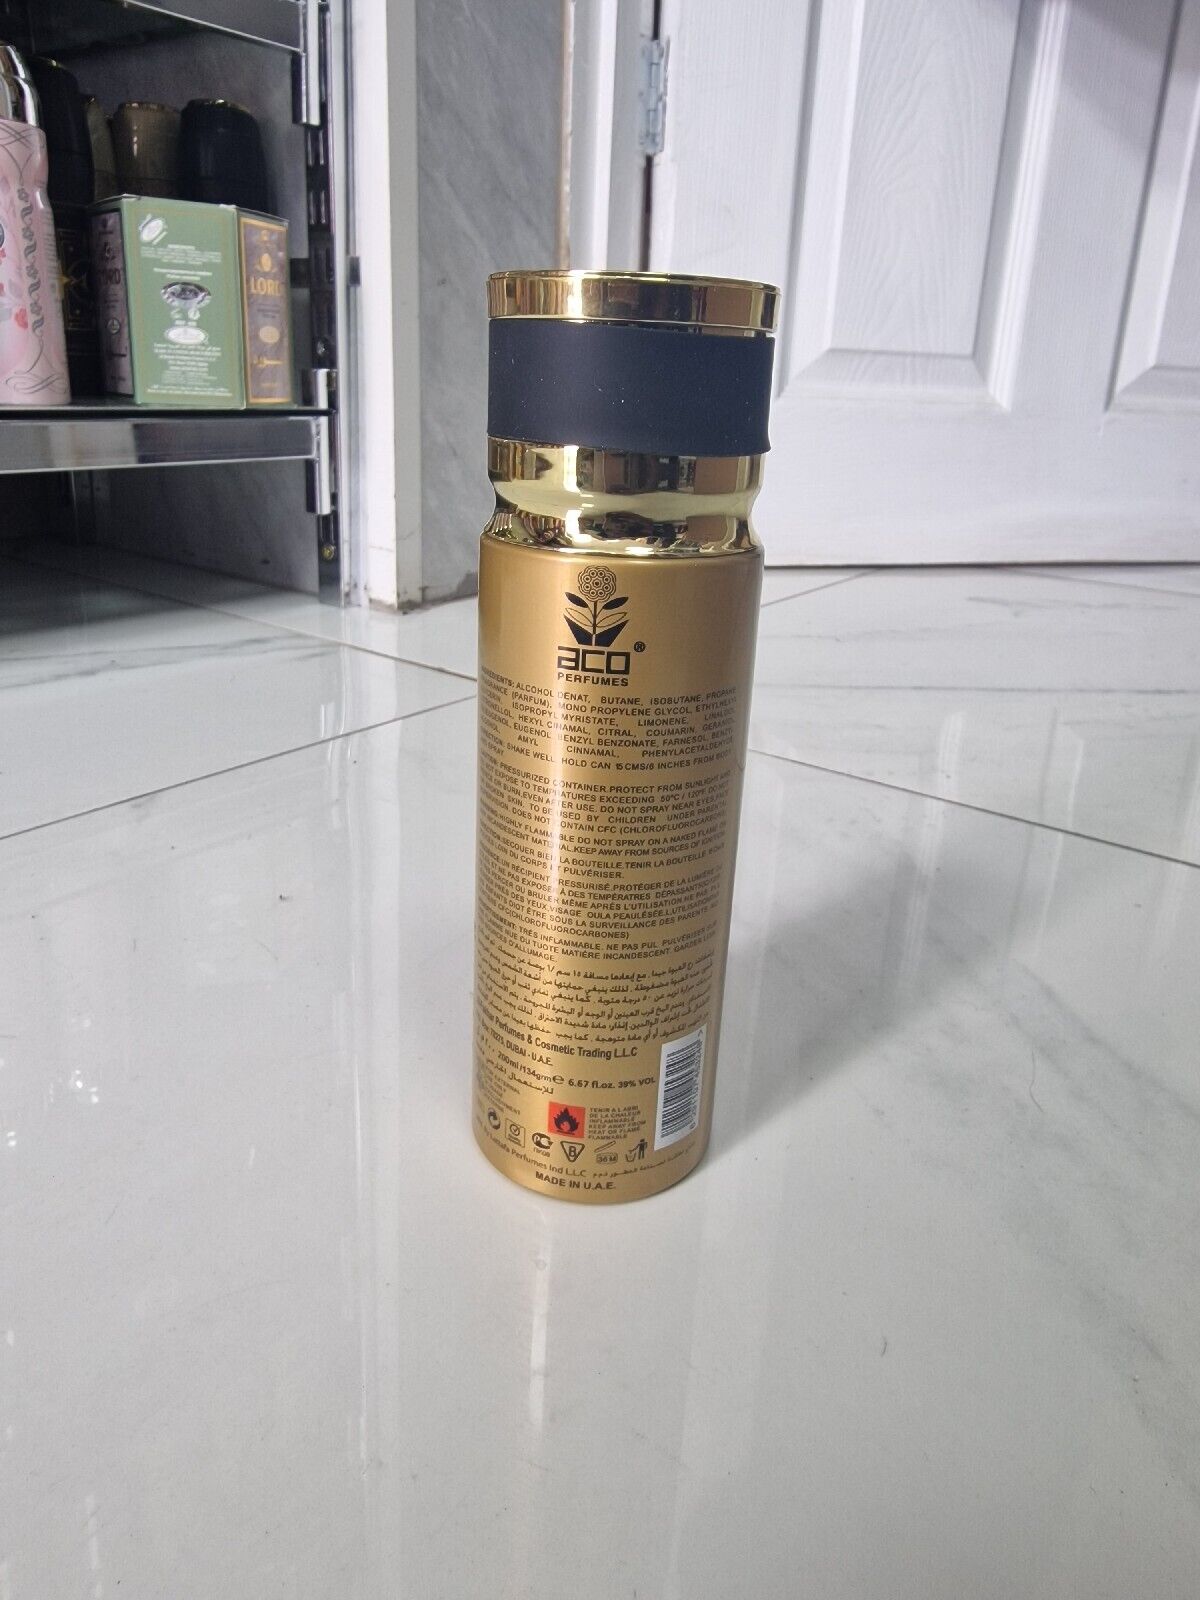 Aco Perfumes Opulent Gold Perfumed Deodorant dubai UAE - 200ml